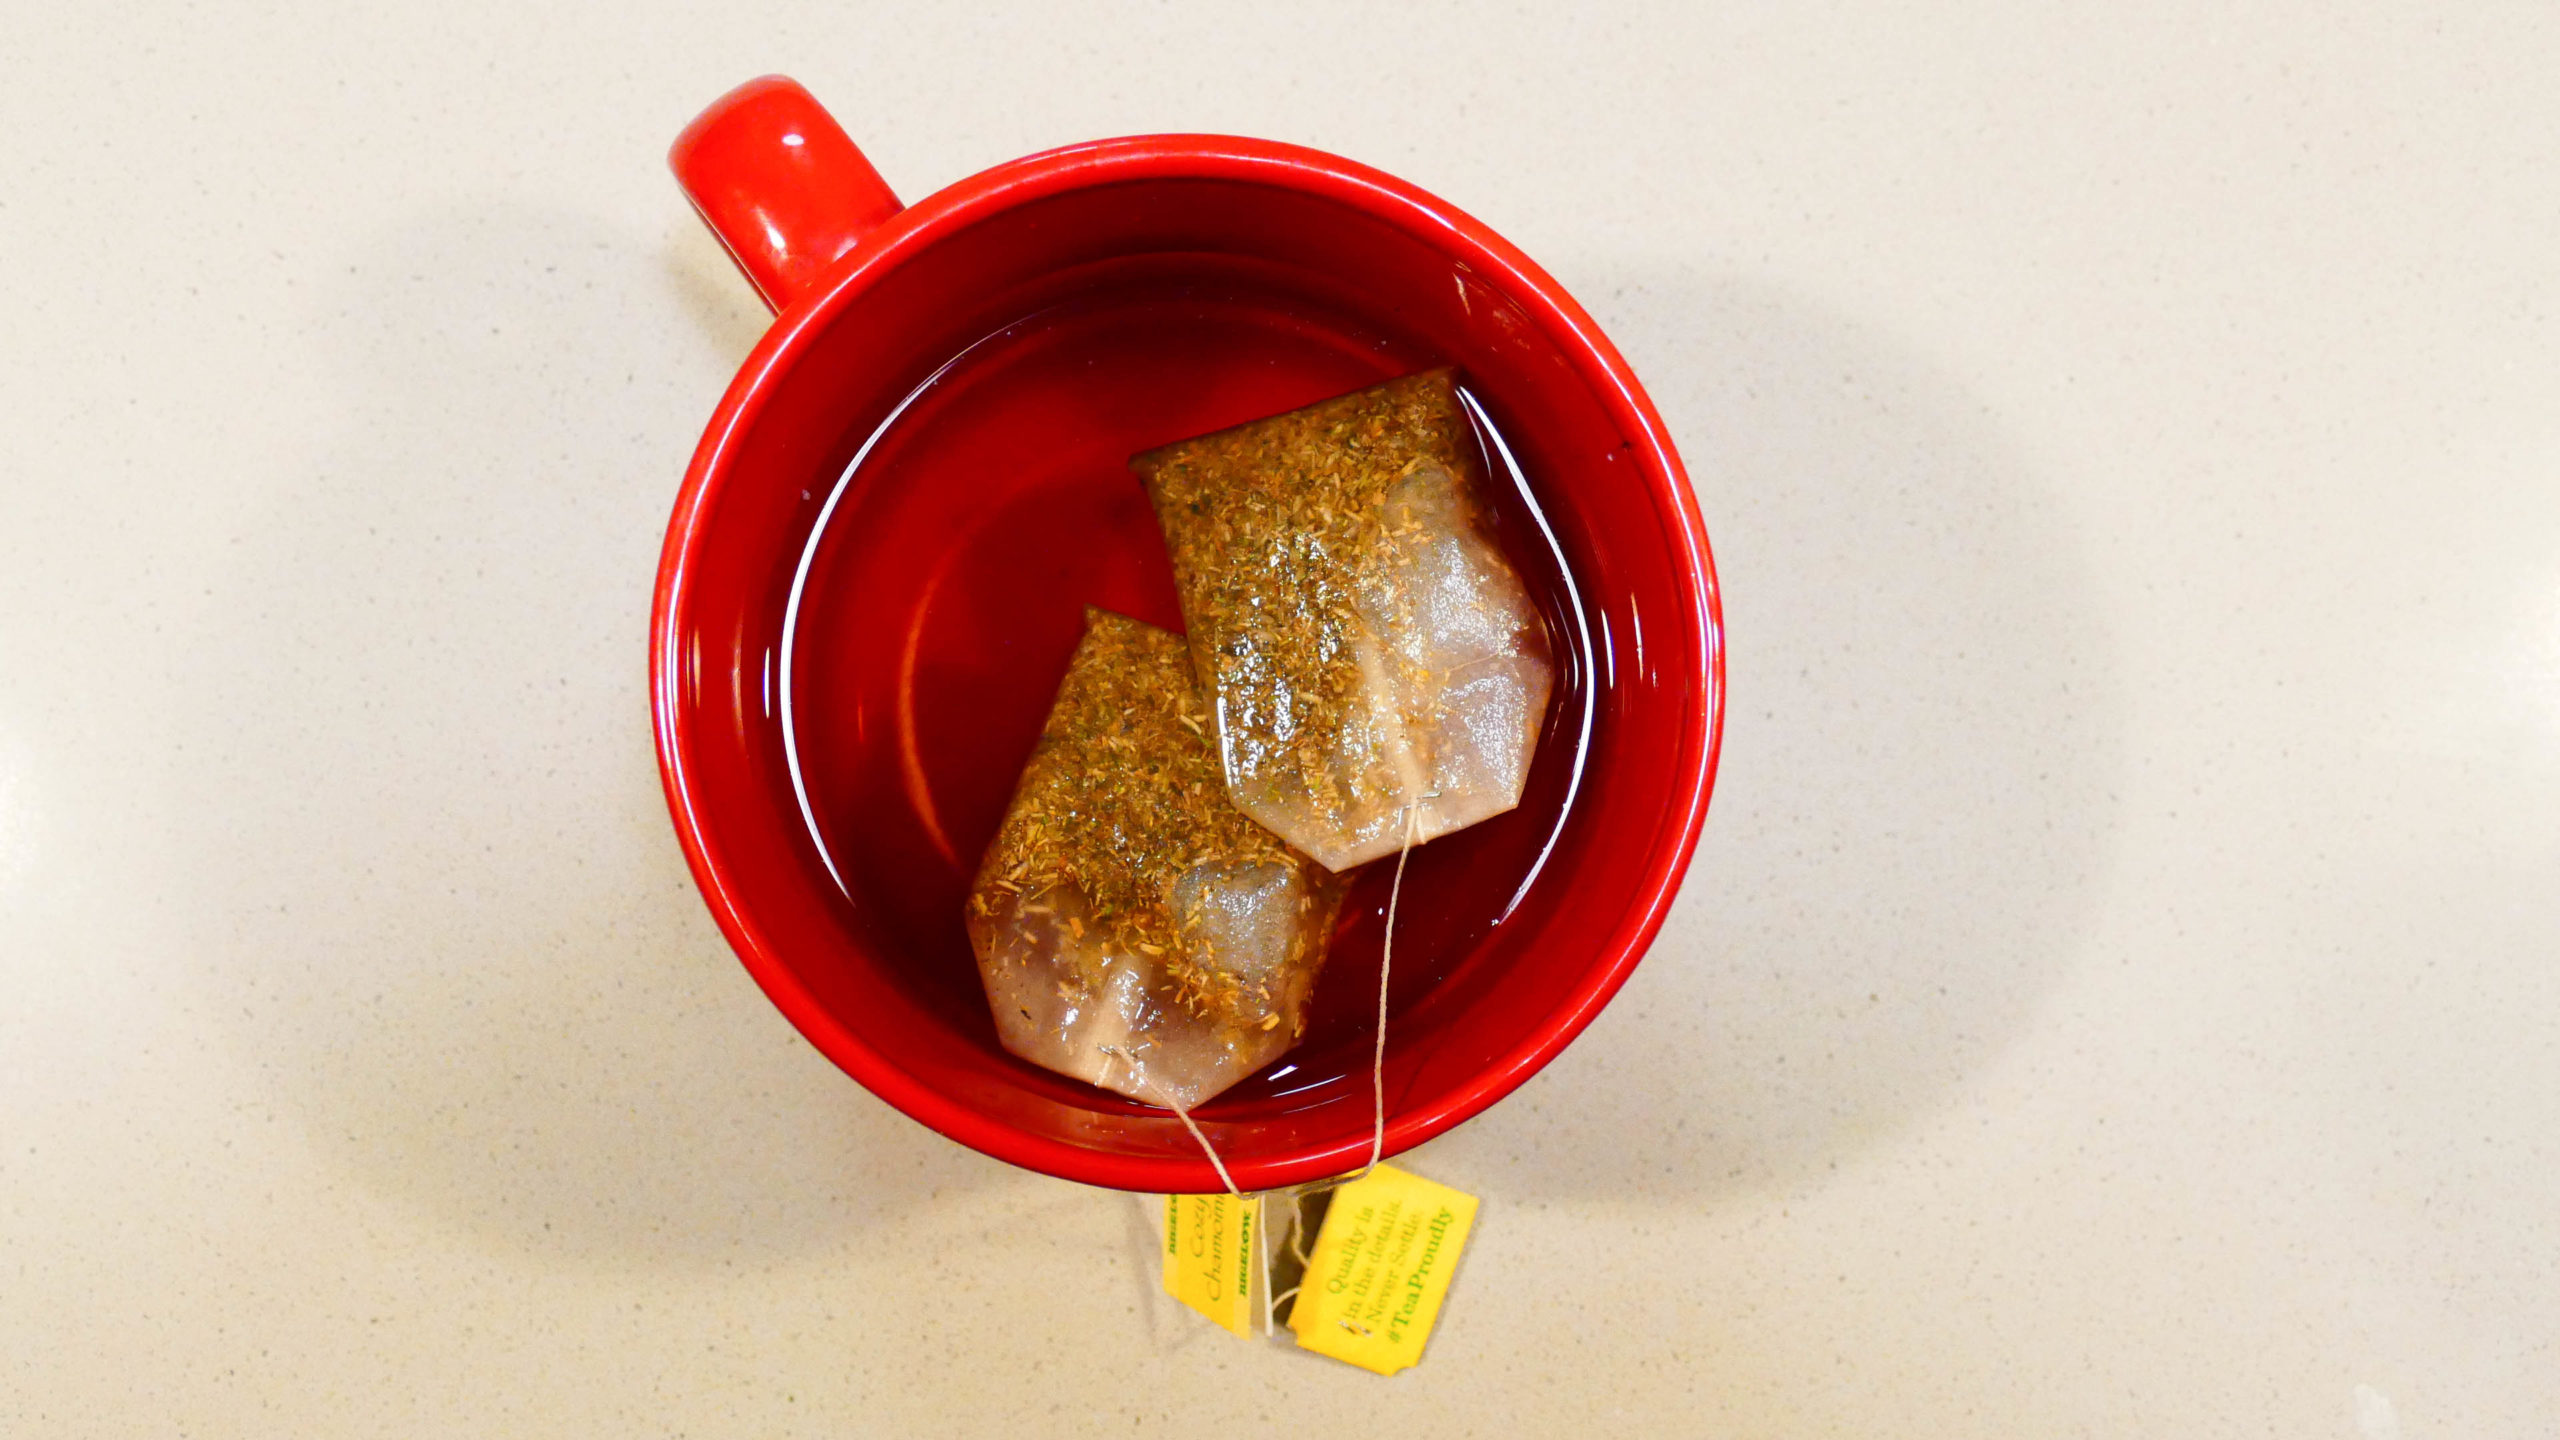 OPINION: Tea tastes superior to coffee, benefits student digestive health